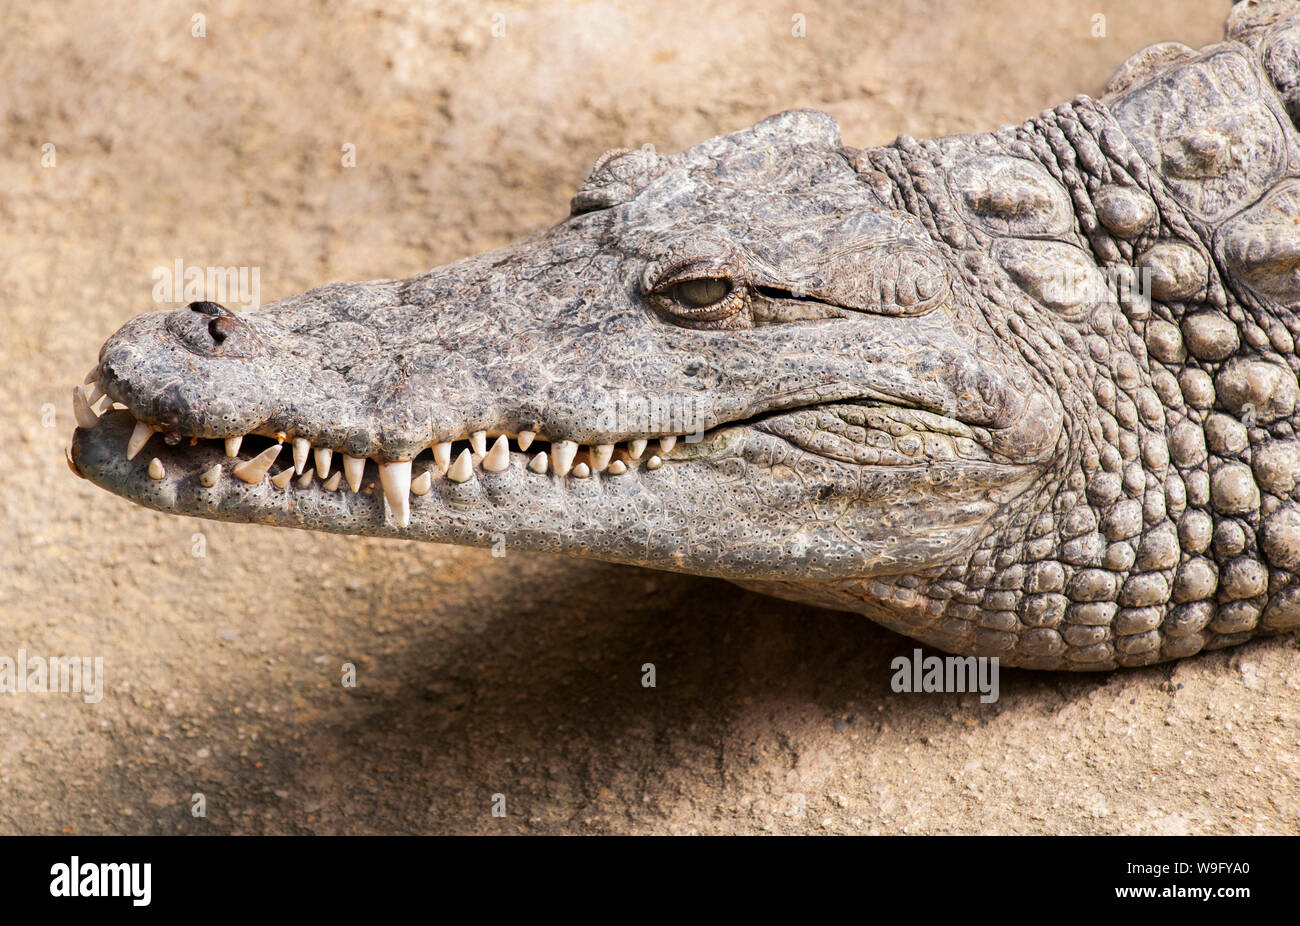 Head detail of Nile Crocodile, Crocodylus niloticus, Africa Stock Photo